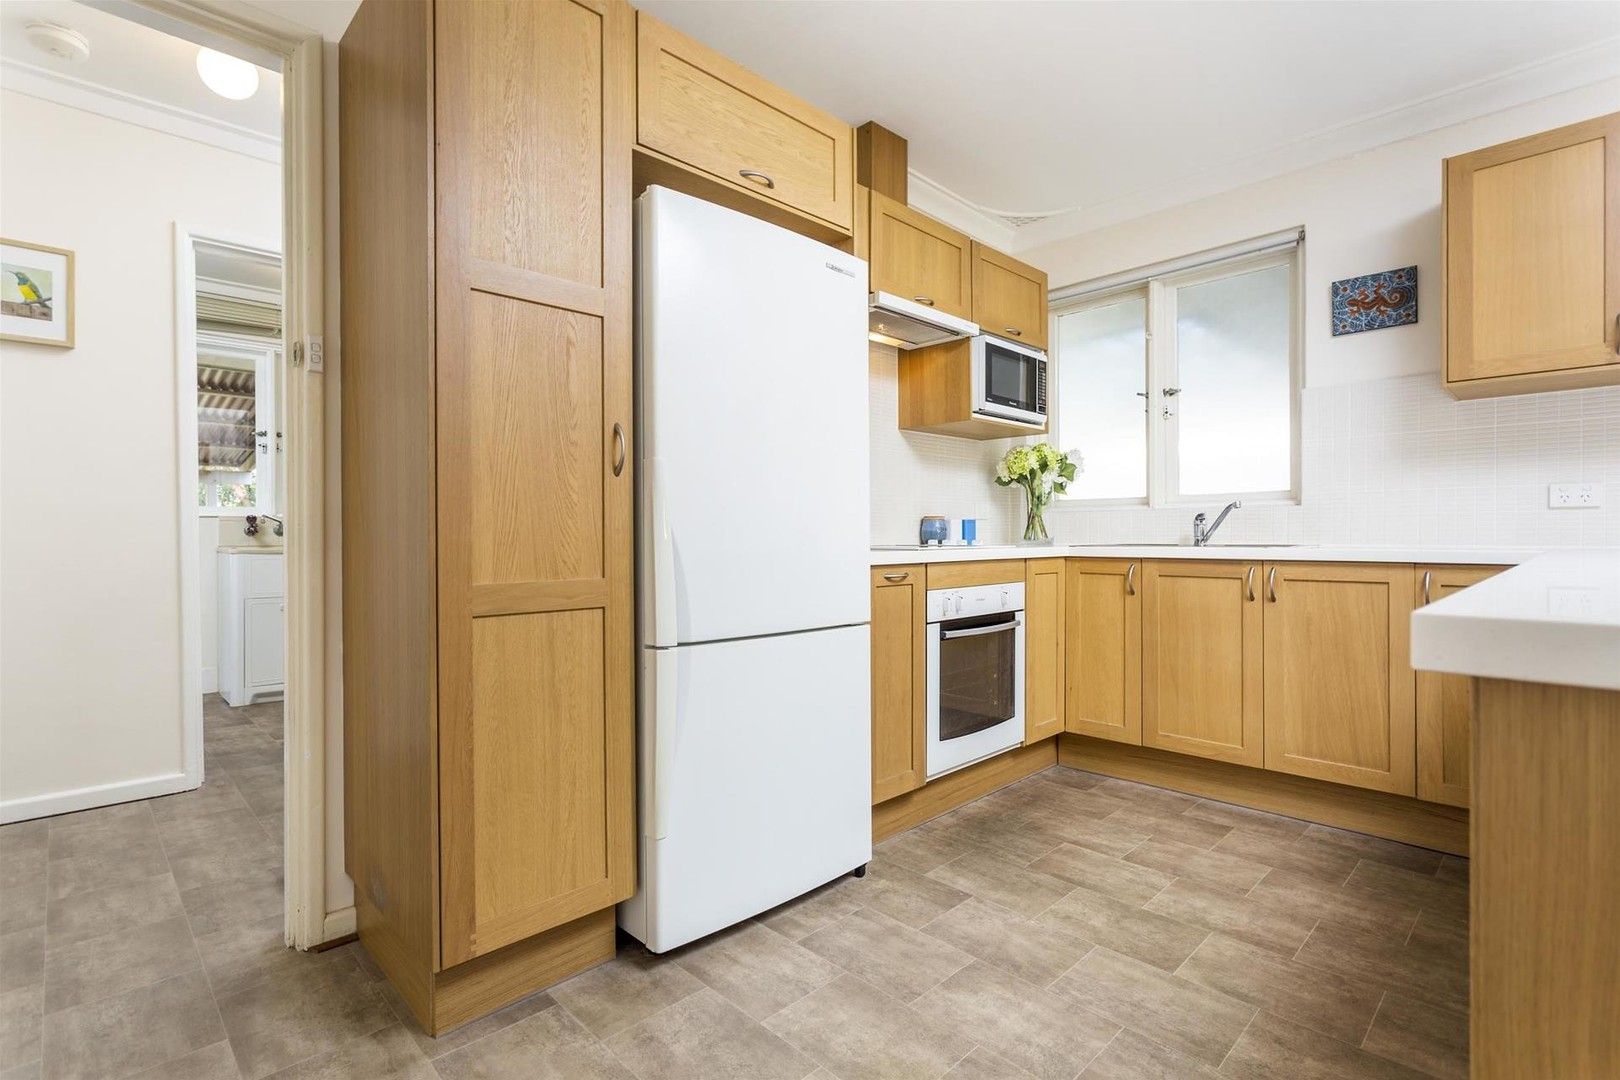 2 bedrooms Apartment / Unit / Flat in 5A Amur Place BATEMAN WA, 6150